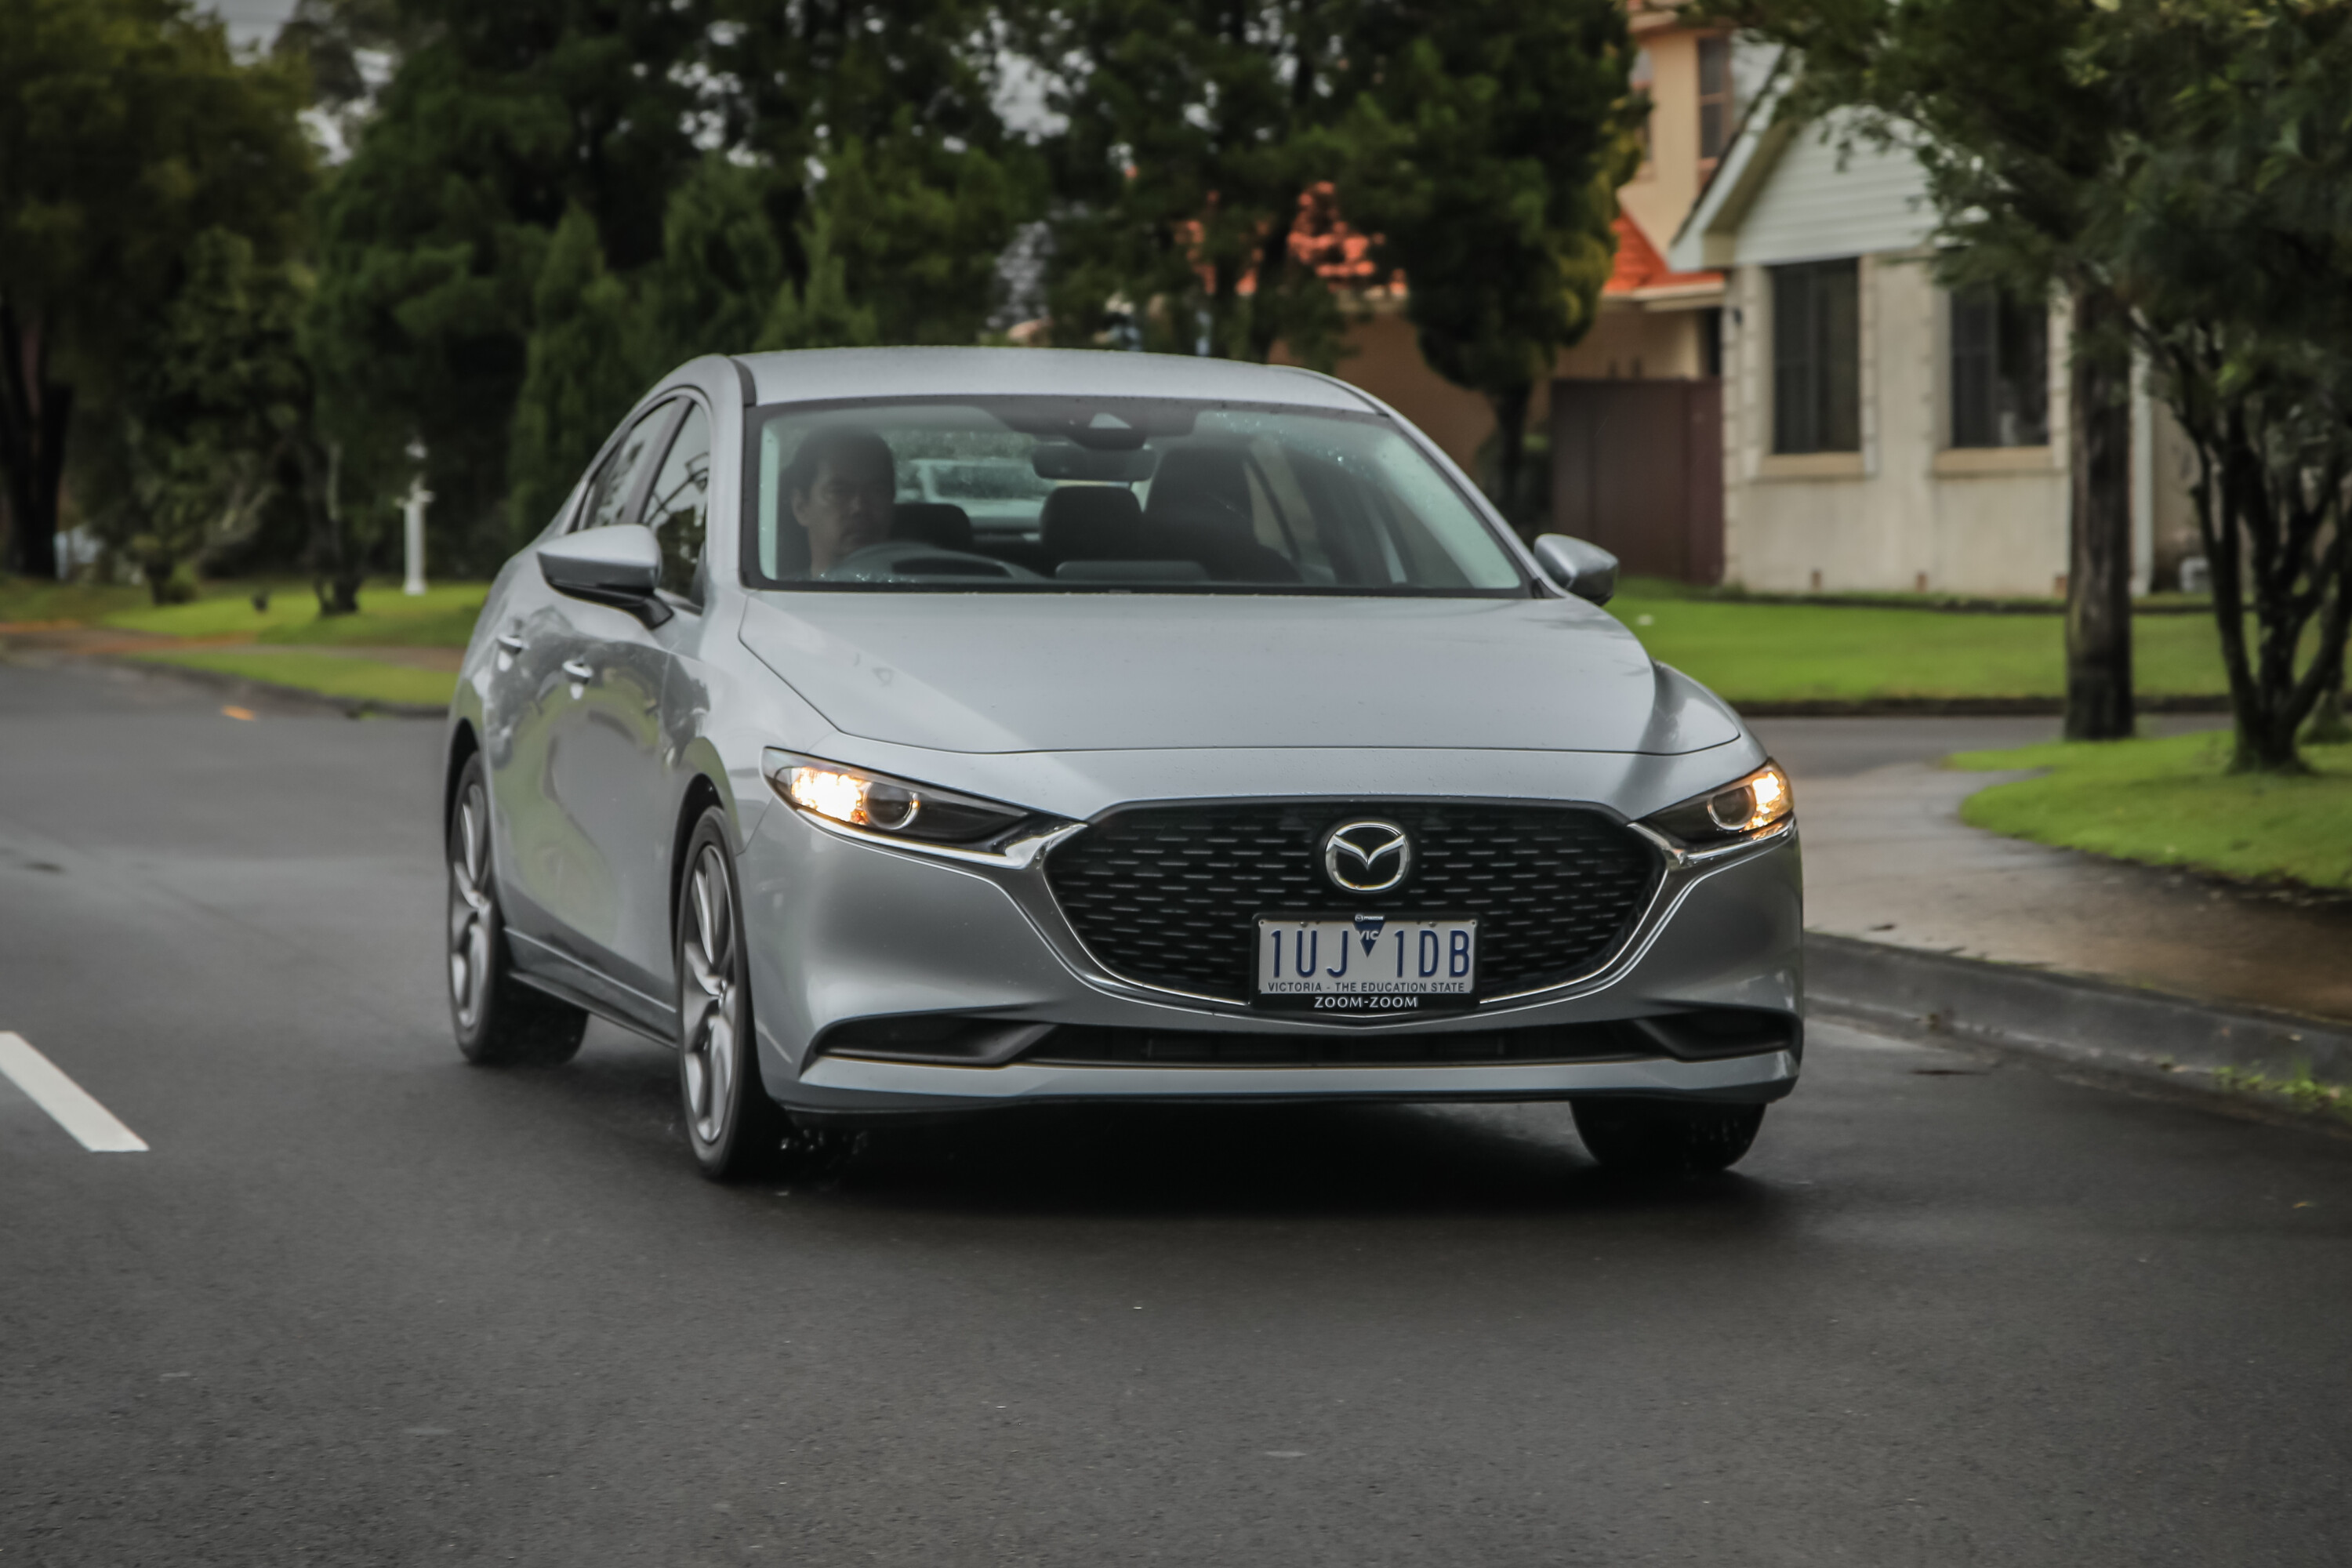 Mazda 3 Skyactiv-X (2021) long-term test review